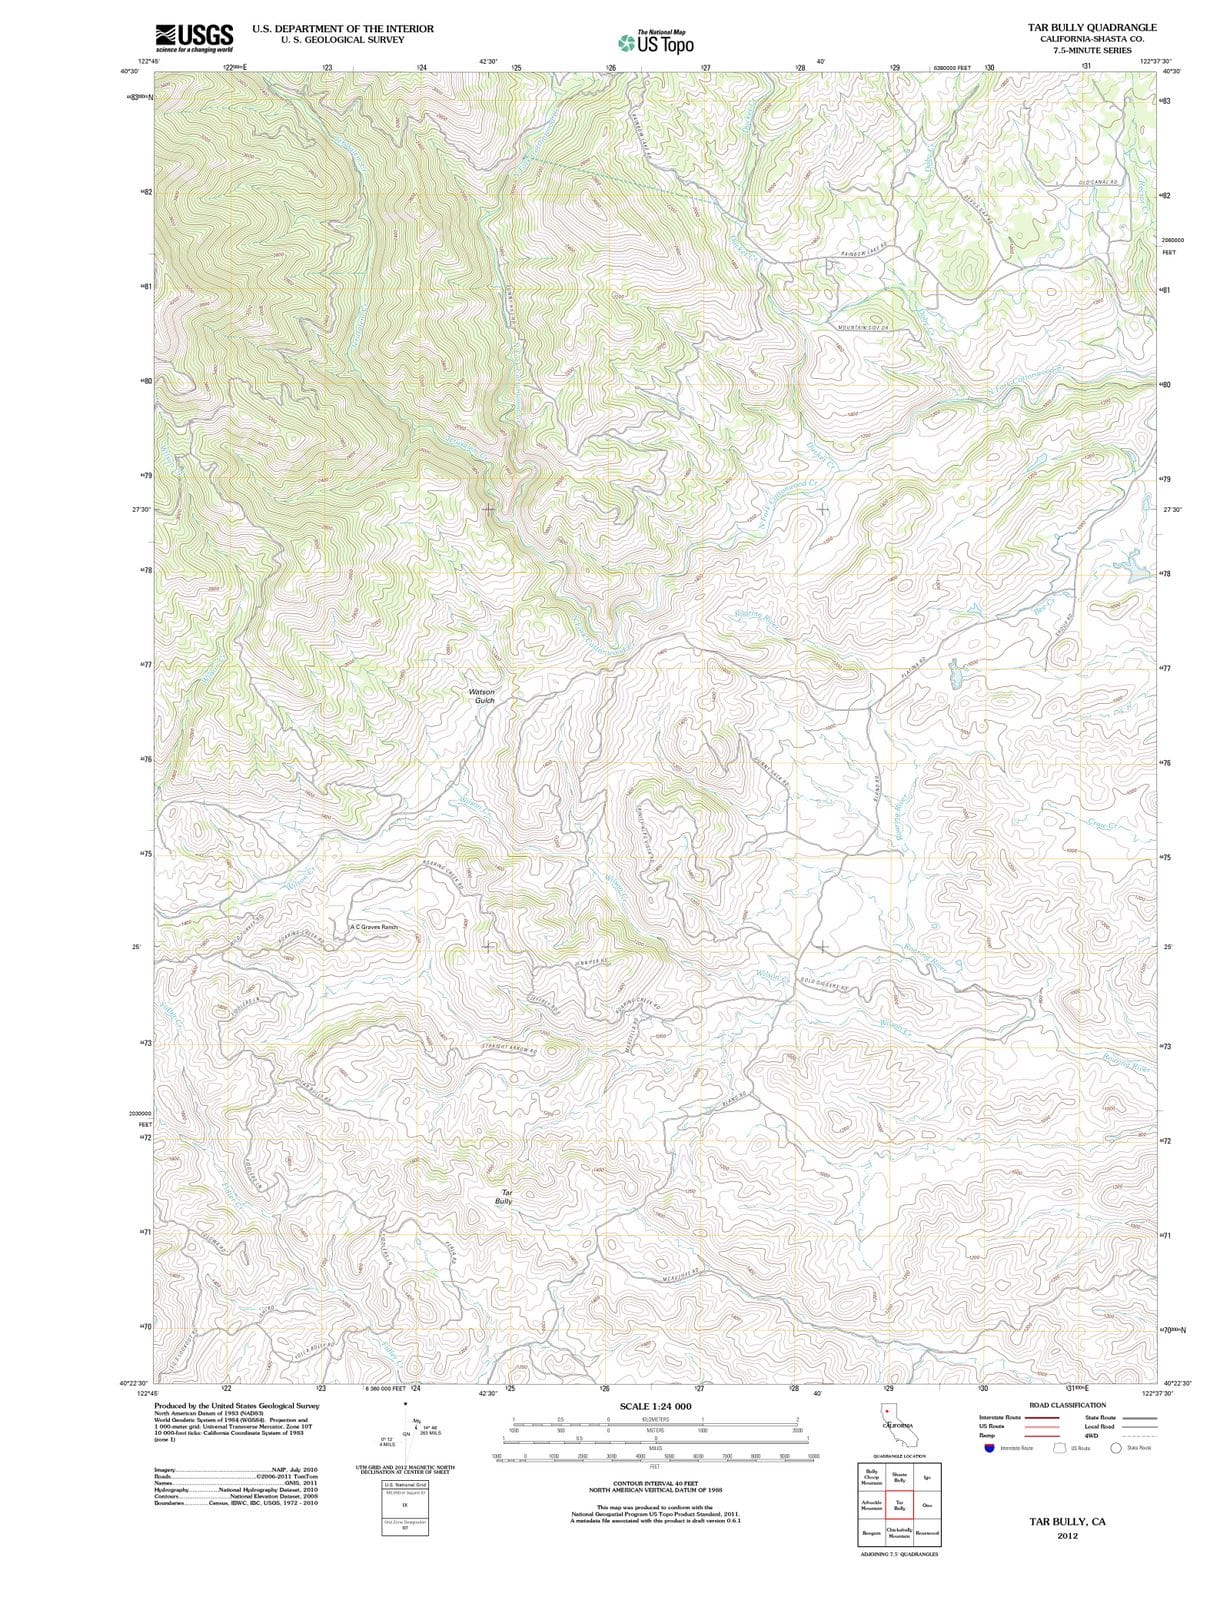 2012 Tar Bully, CA - California - USGS Topographic Map